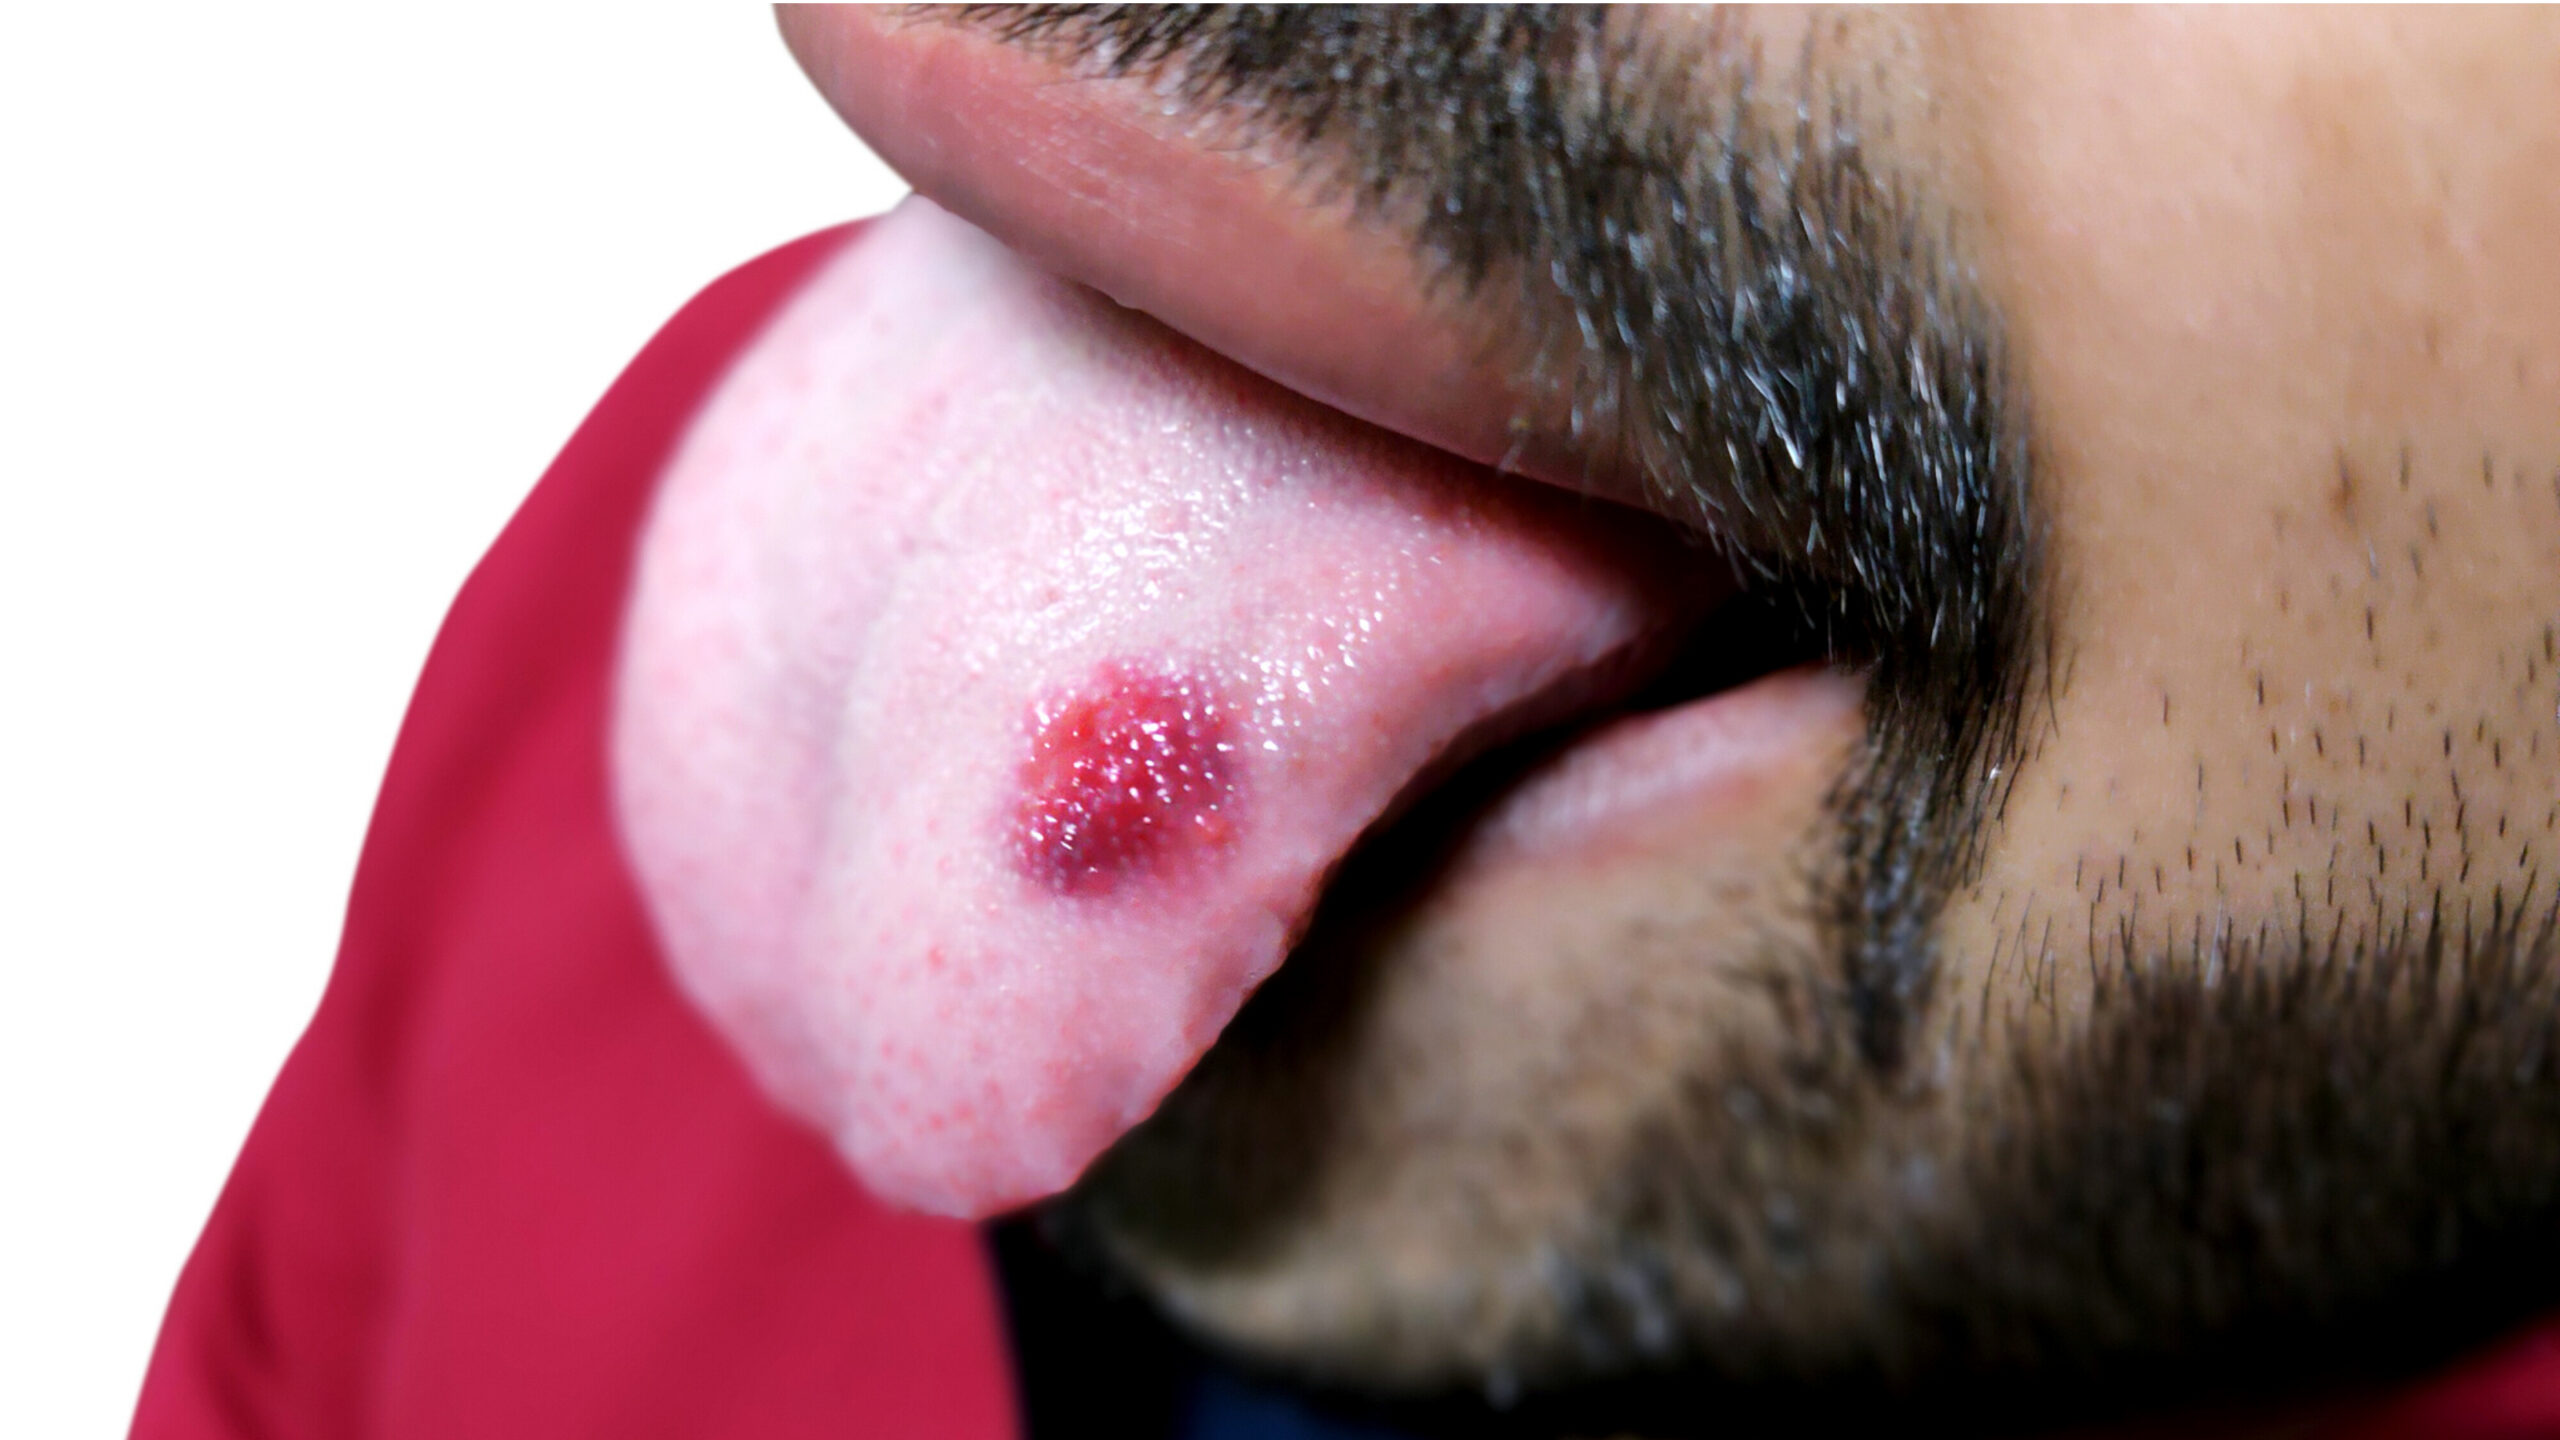 picture of oral lichen planus on a male tongue